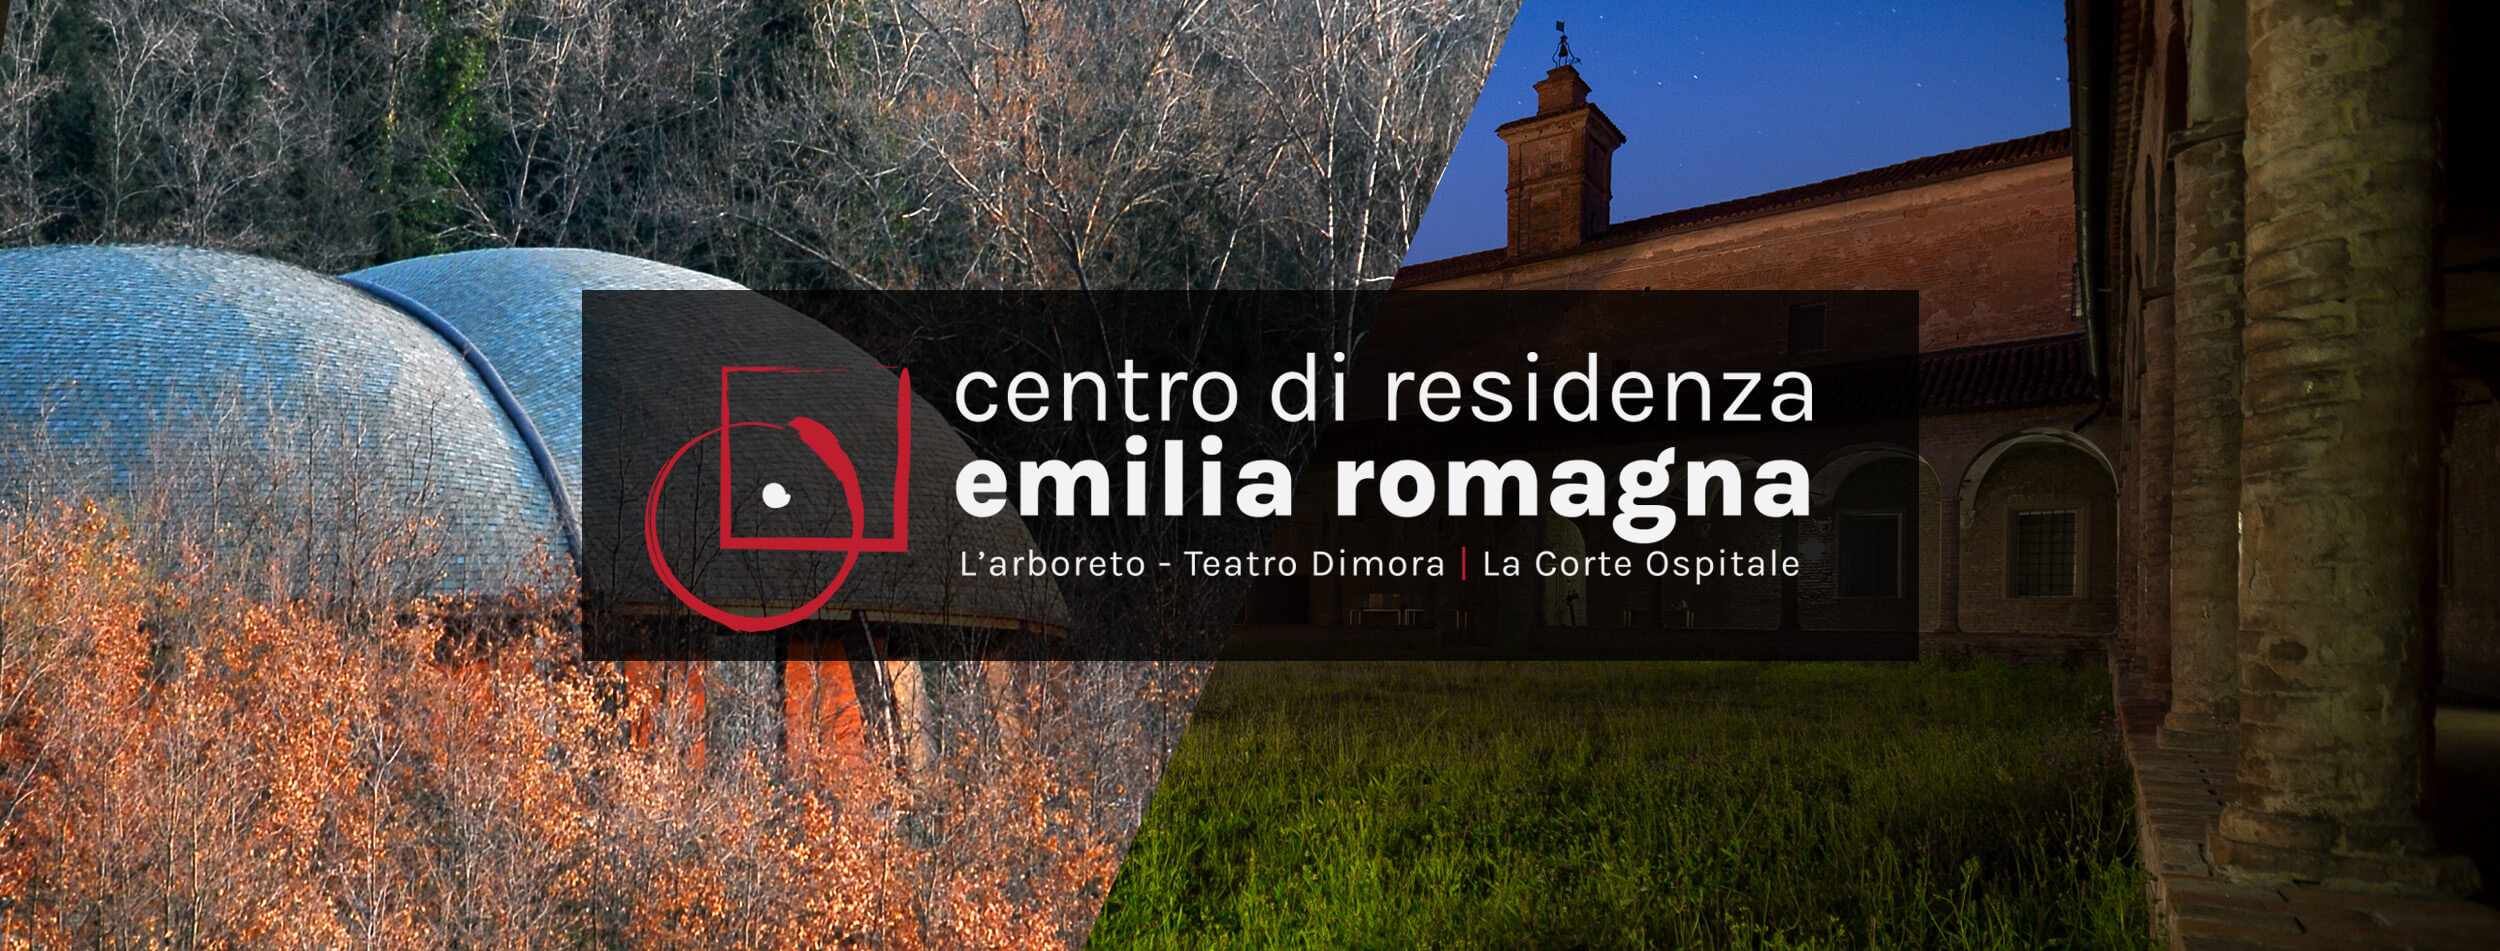 Centro di Residenza Emilia-Romagna / i luoghi